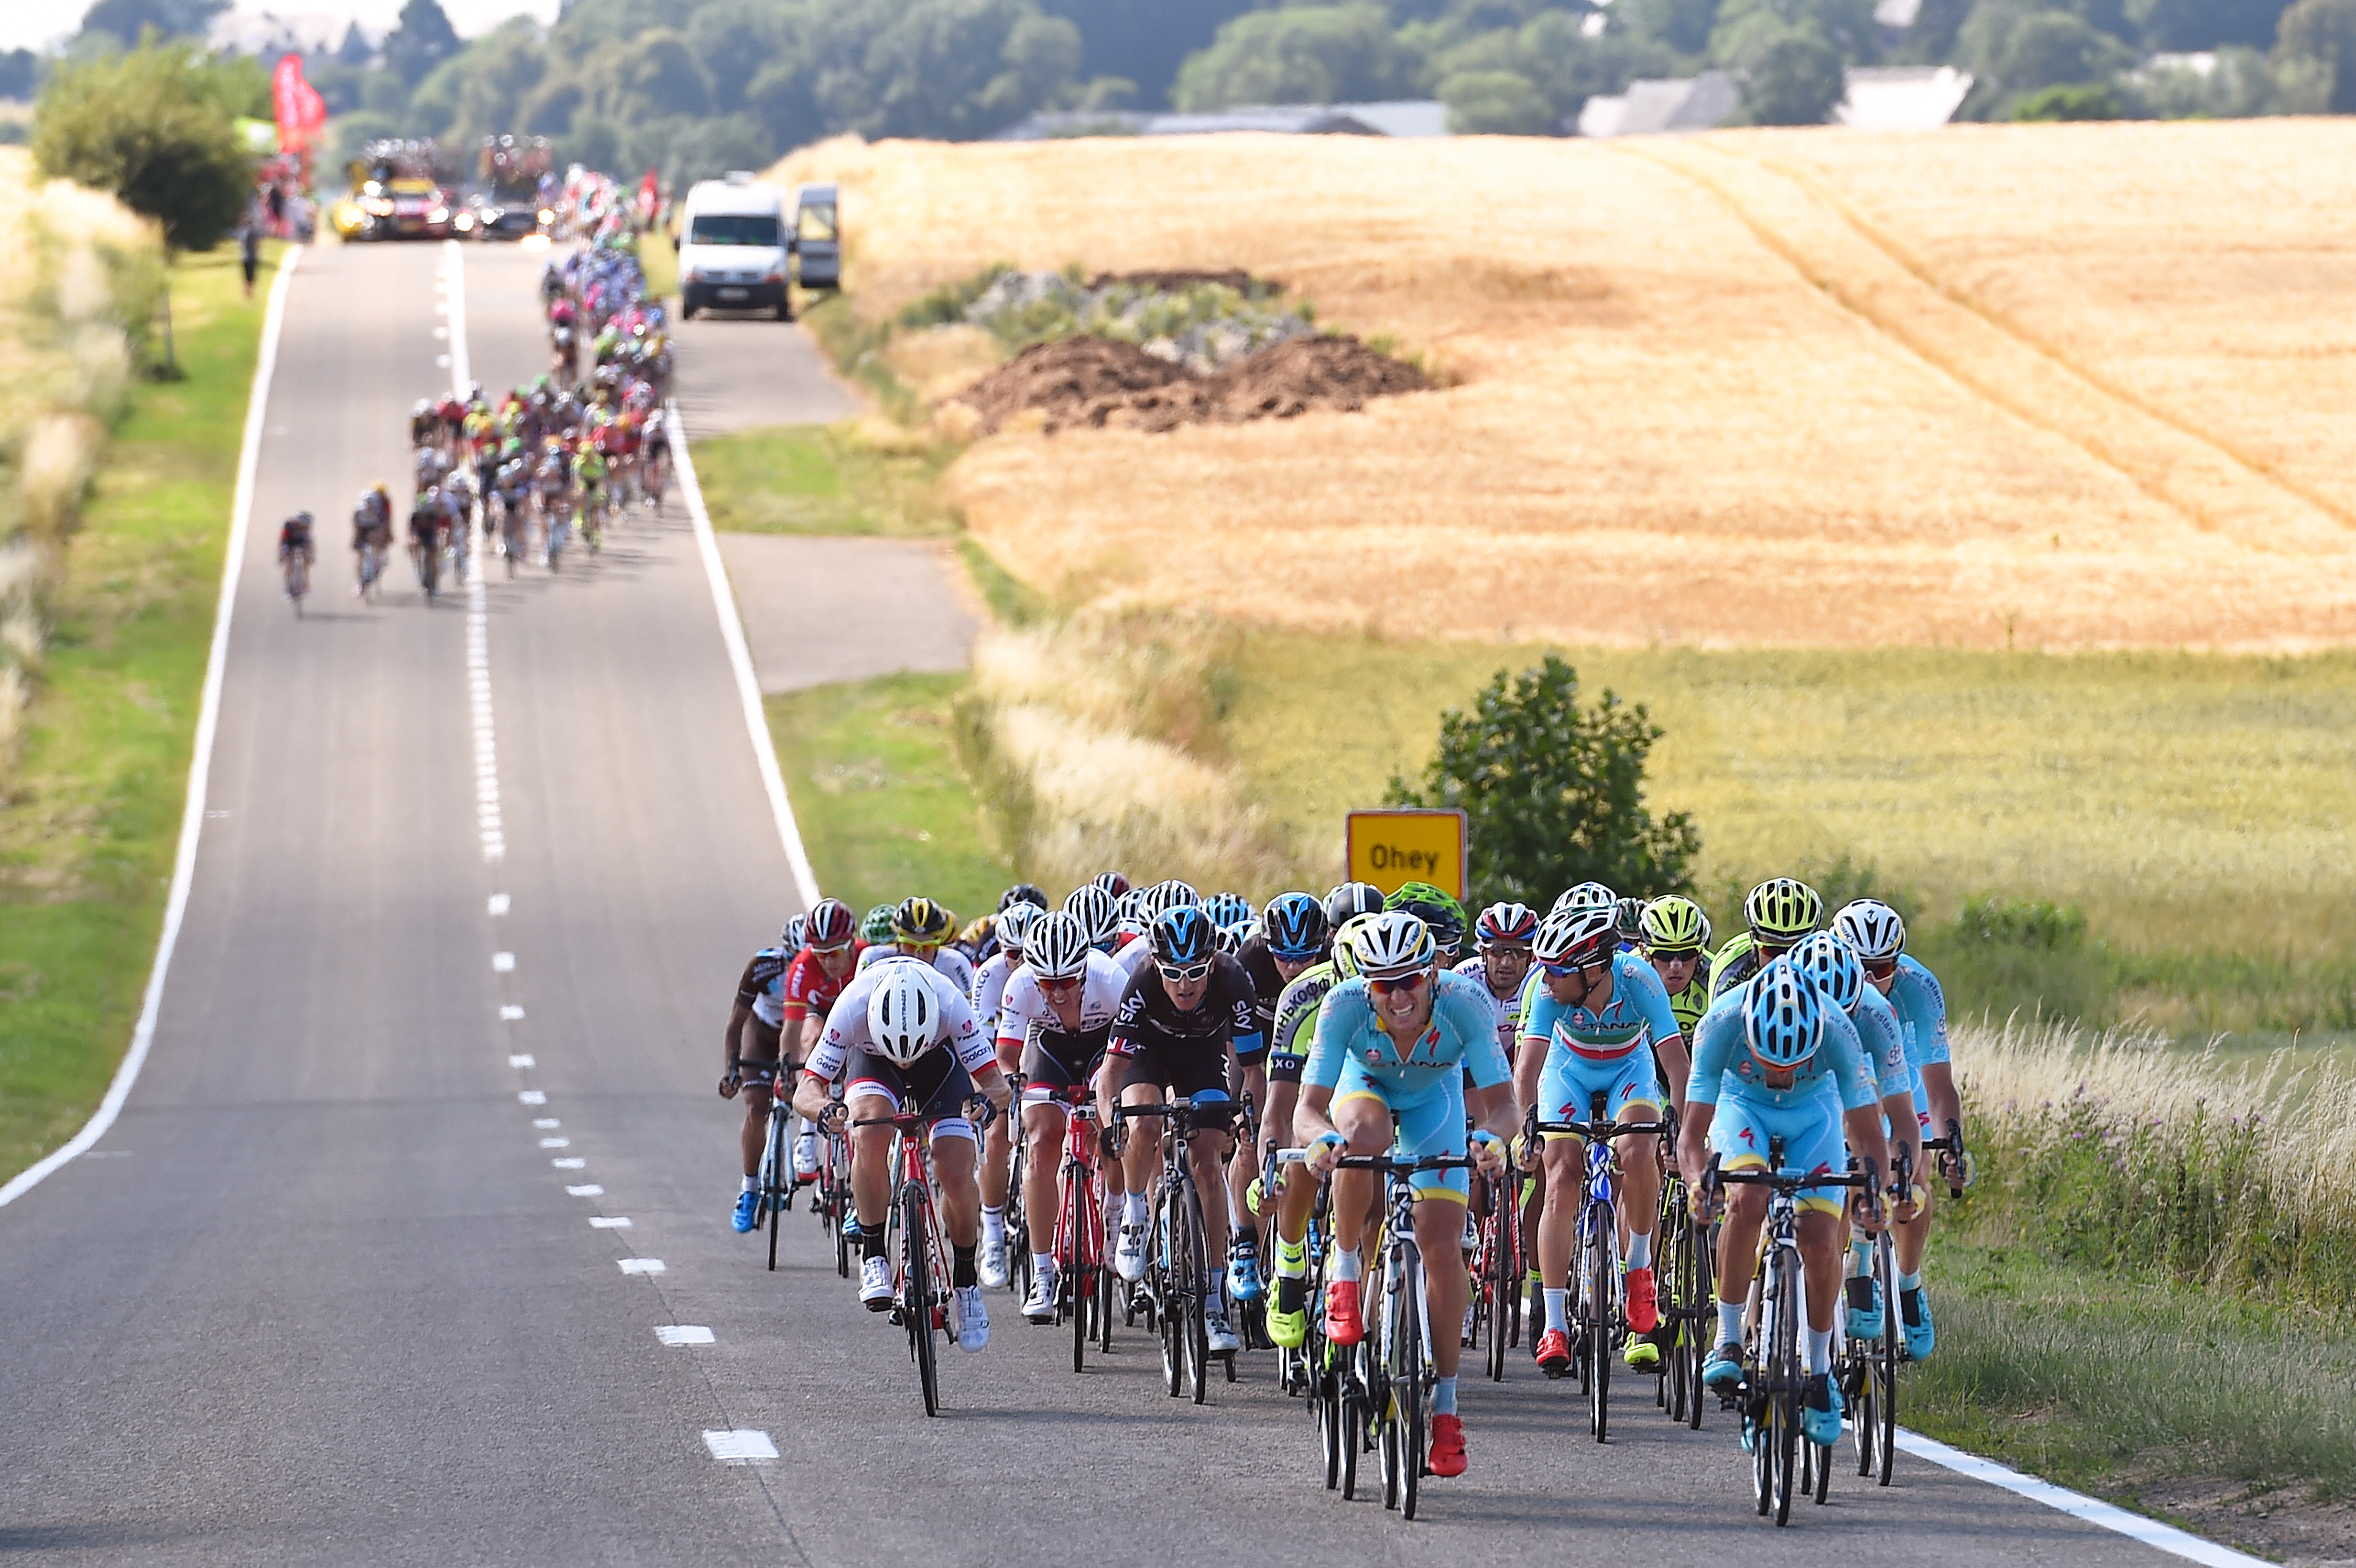 Tour de France echelons in the crosswinds